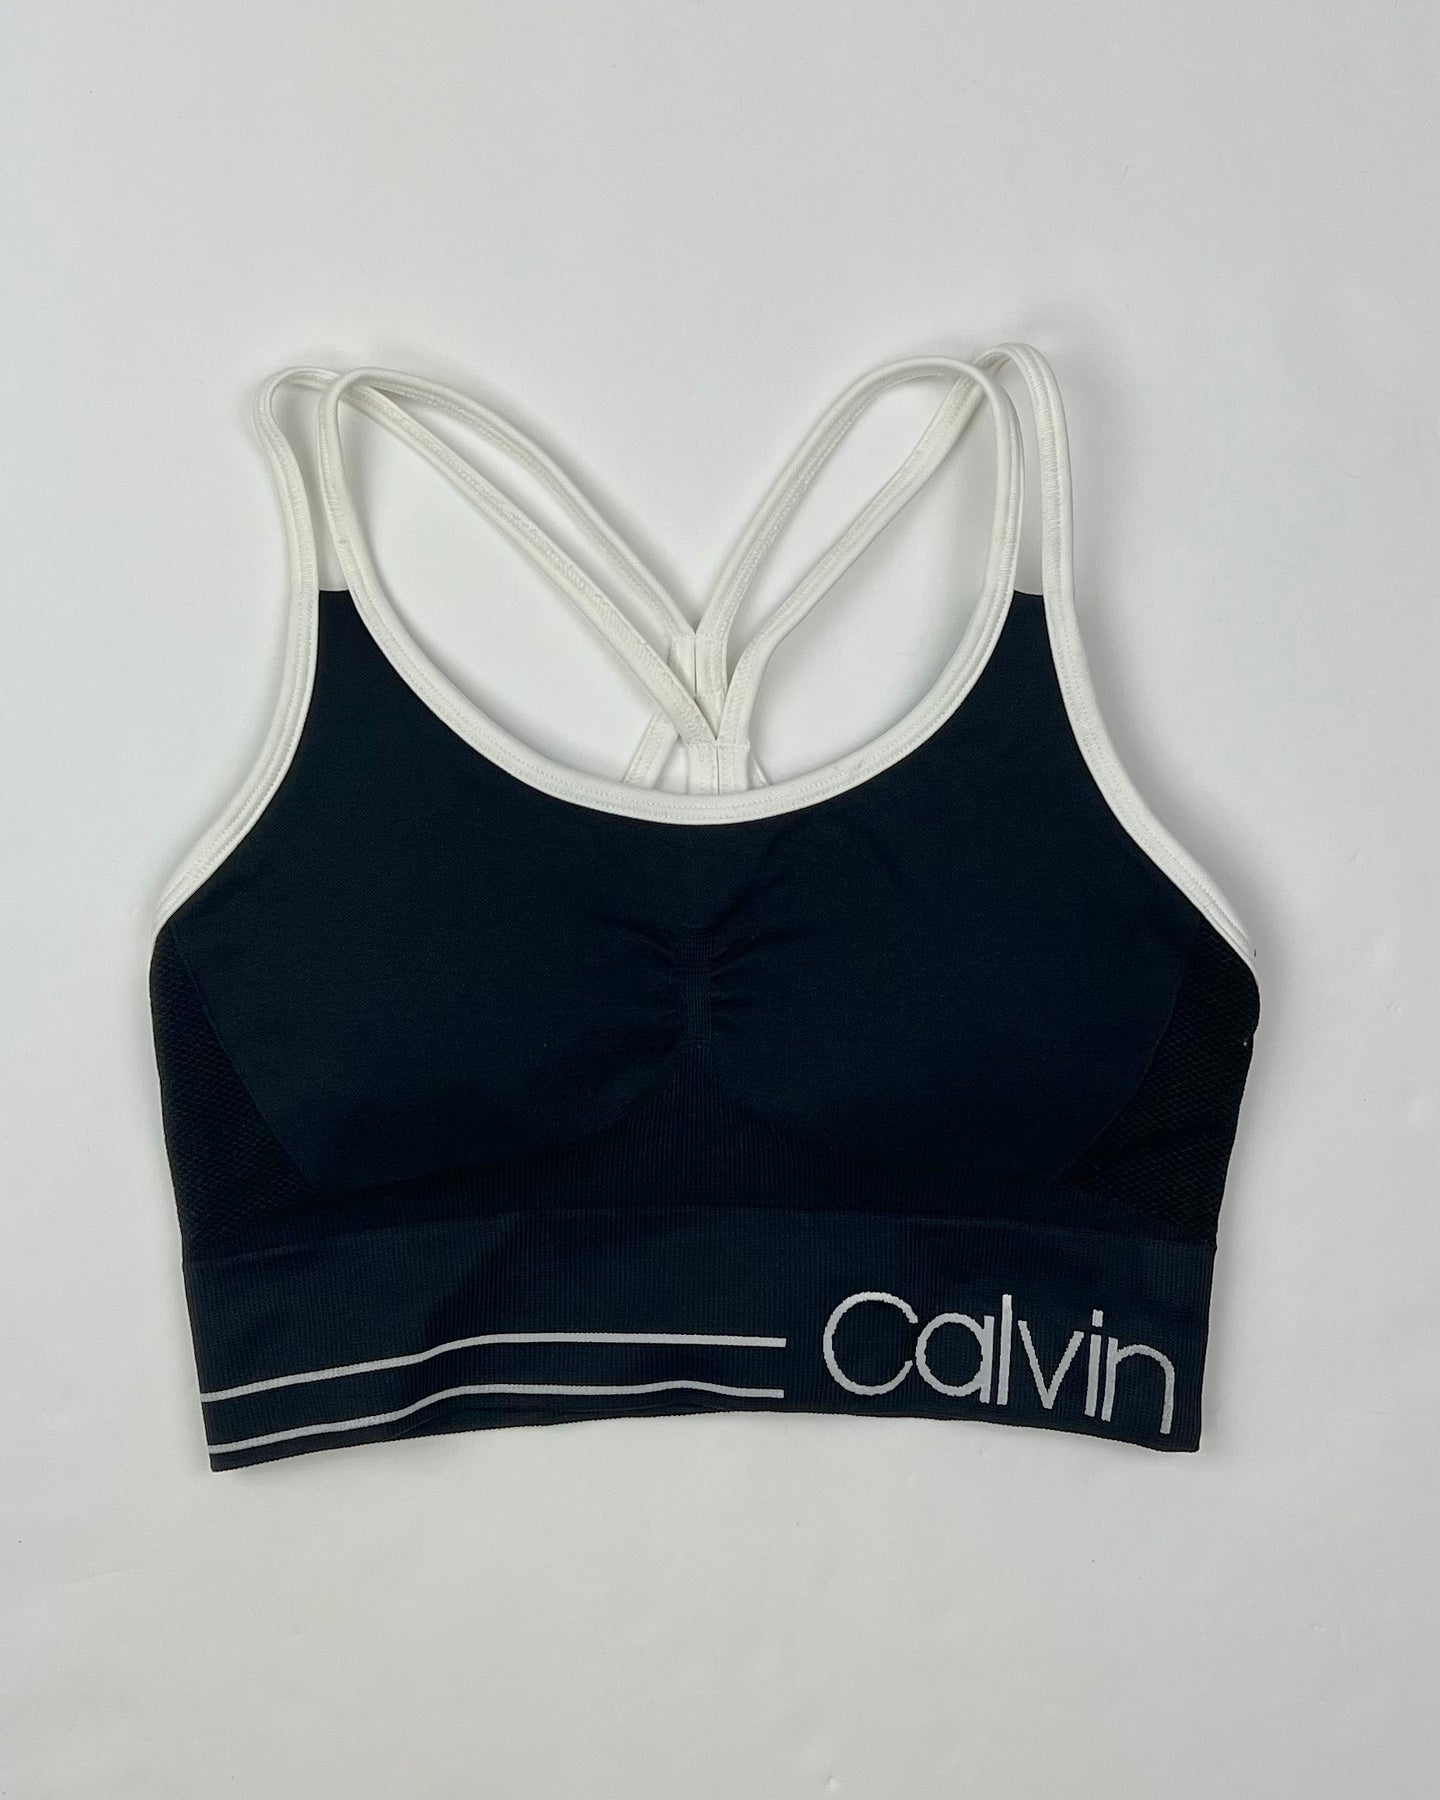 Calvin Klein Black and White Trim Sports Bra - Small – The Fashion